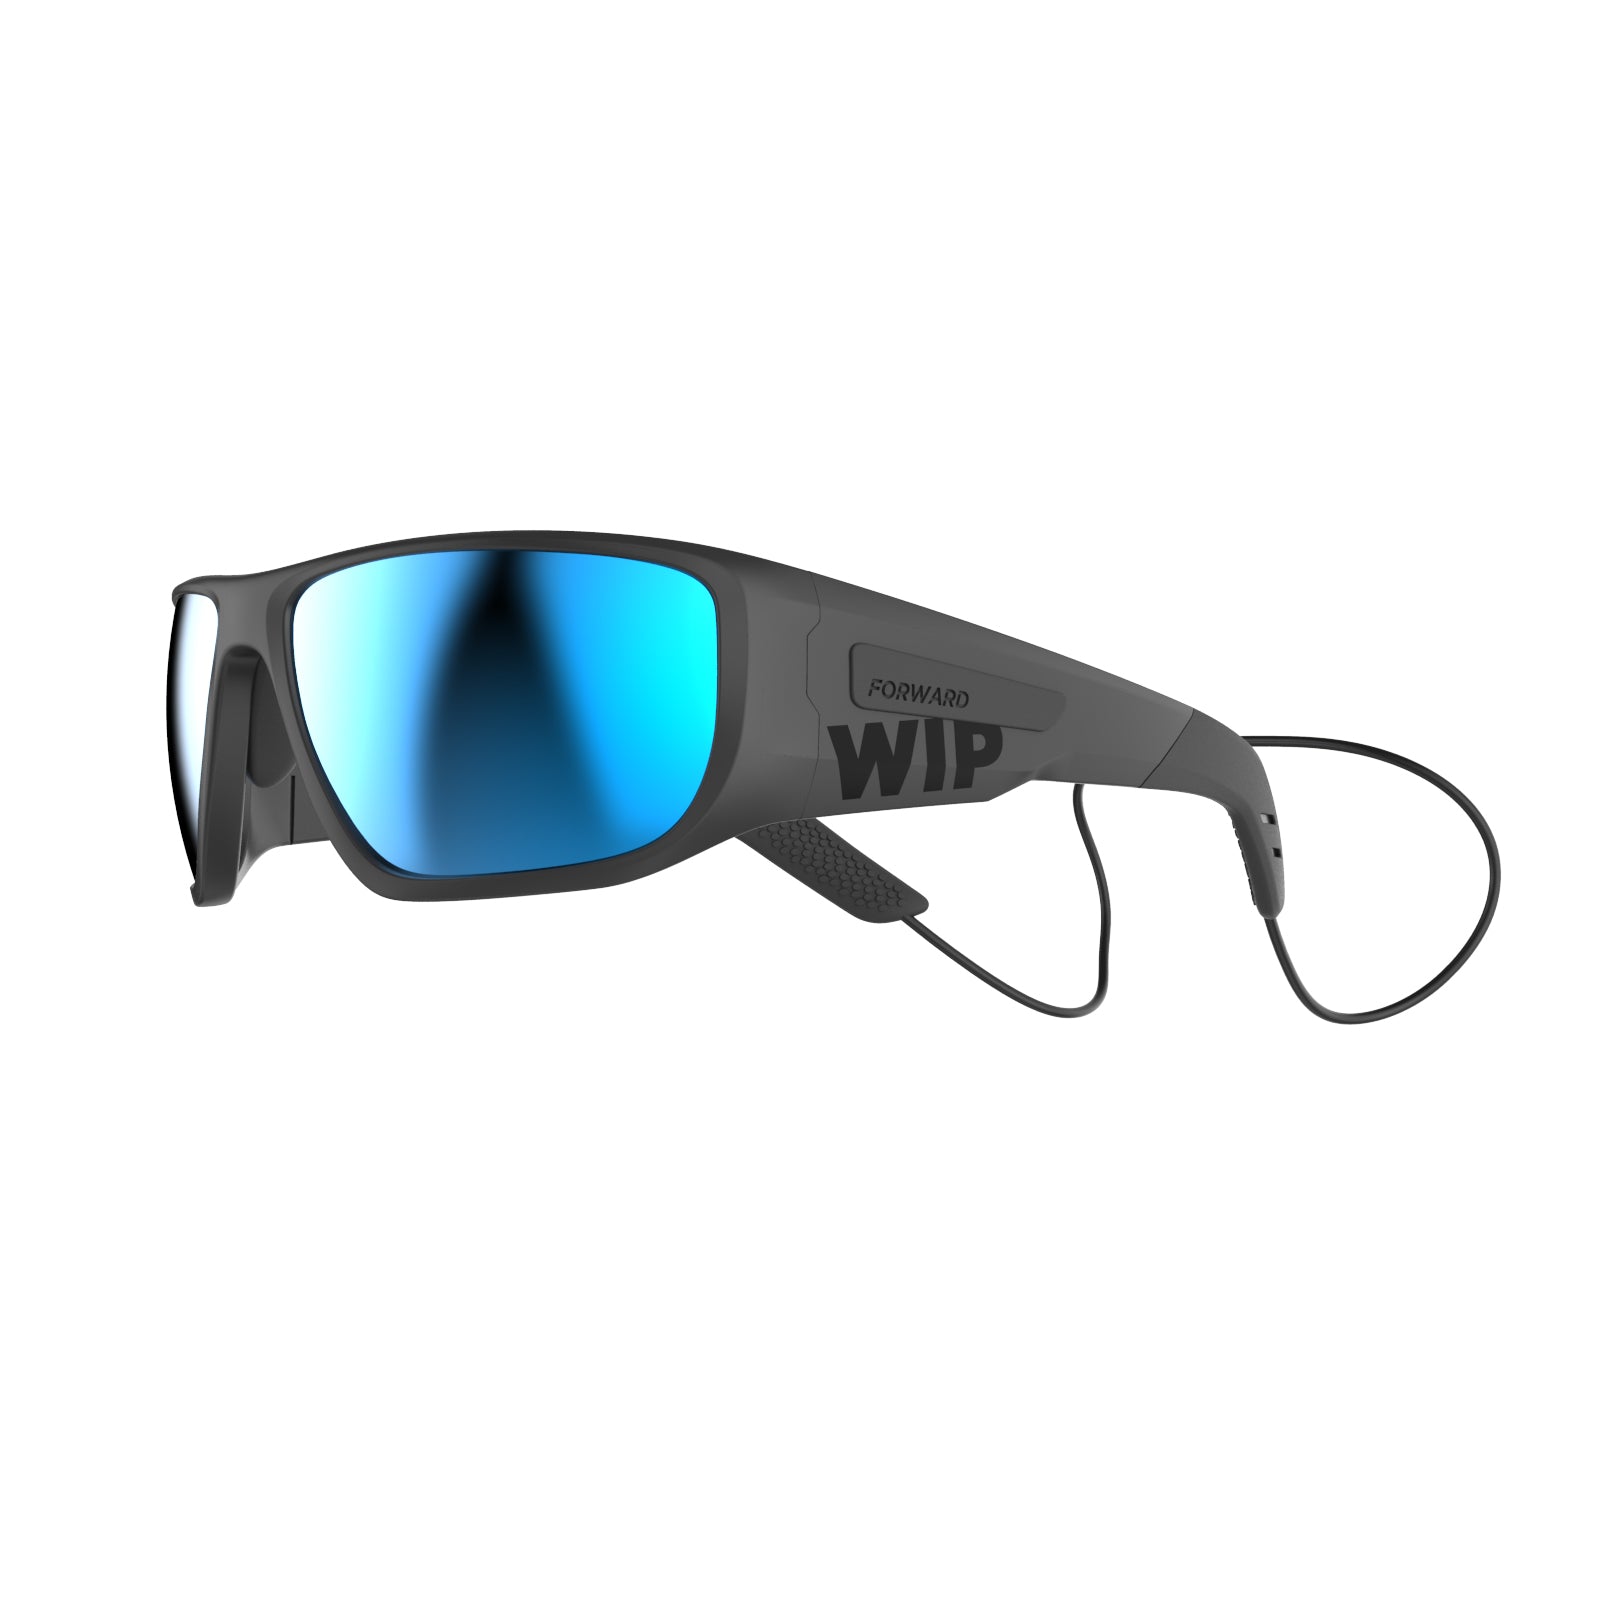 Gust Evo Sunglasses BL/ BL Lens XL